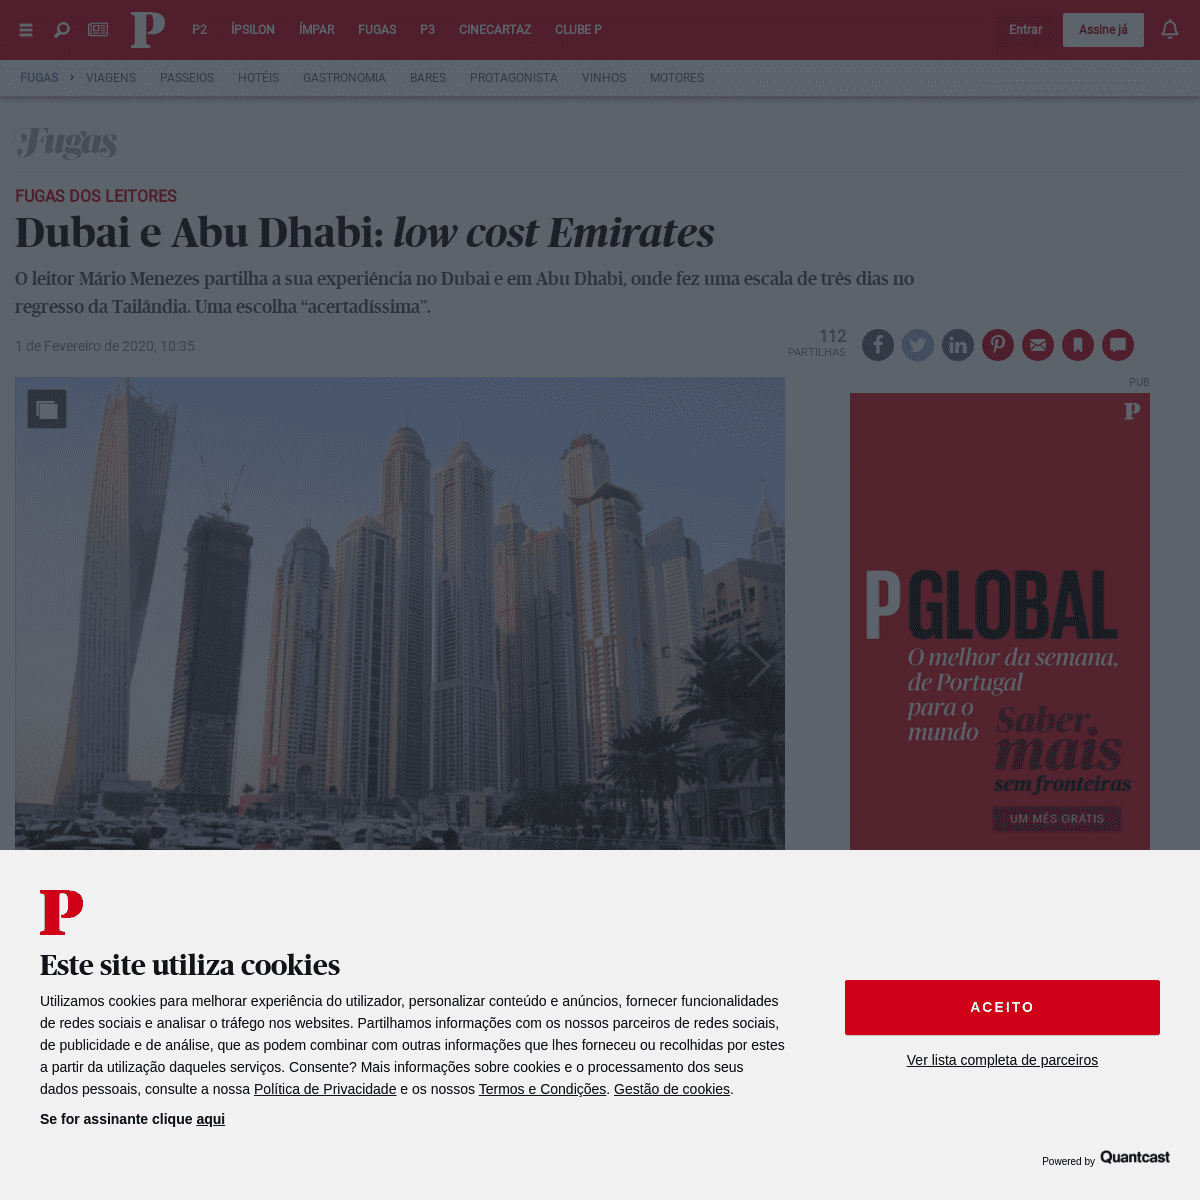 A complete backup of www.publico.pt/2020/02/01/fugas/noticia/dubai-abu-dhabi-low-cost-emirates-1901975